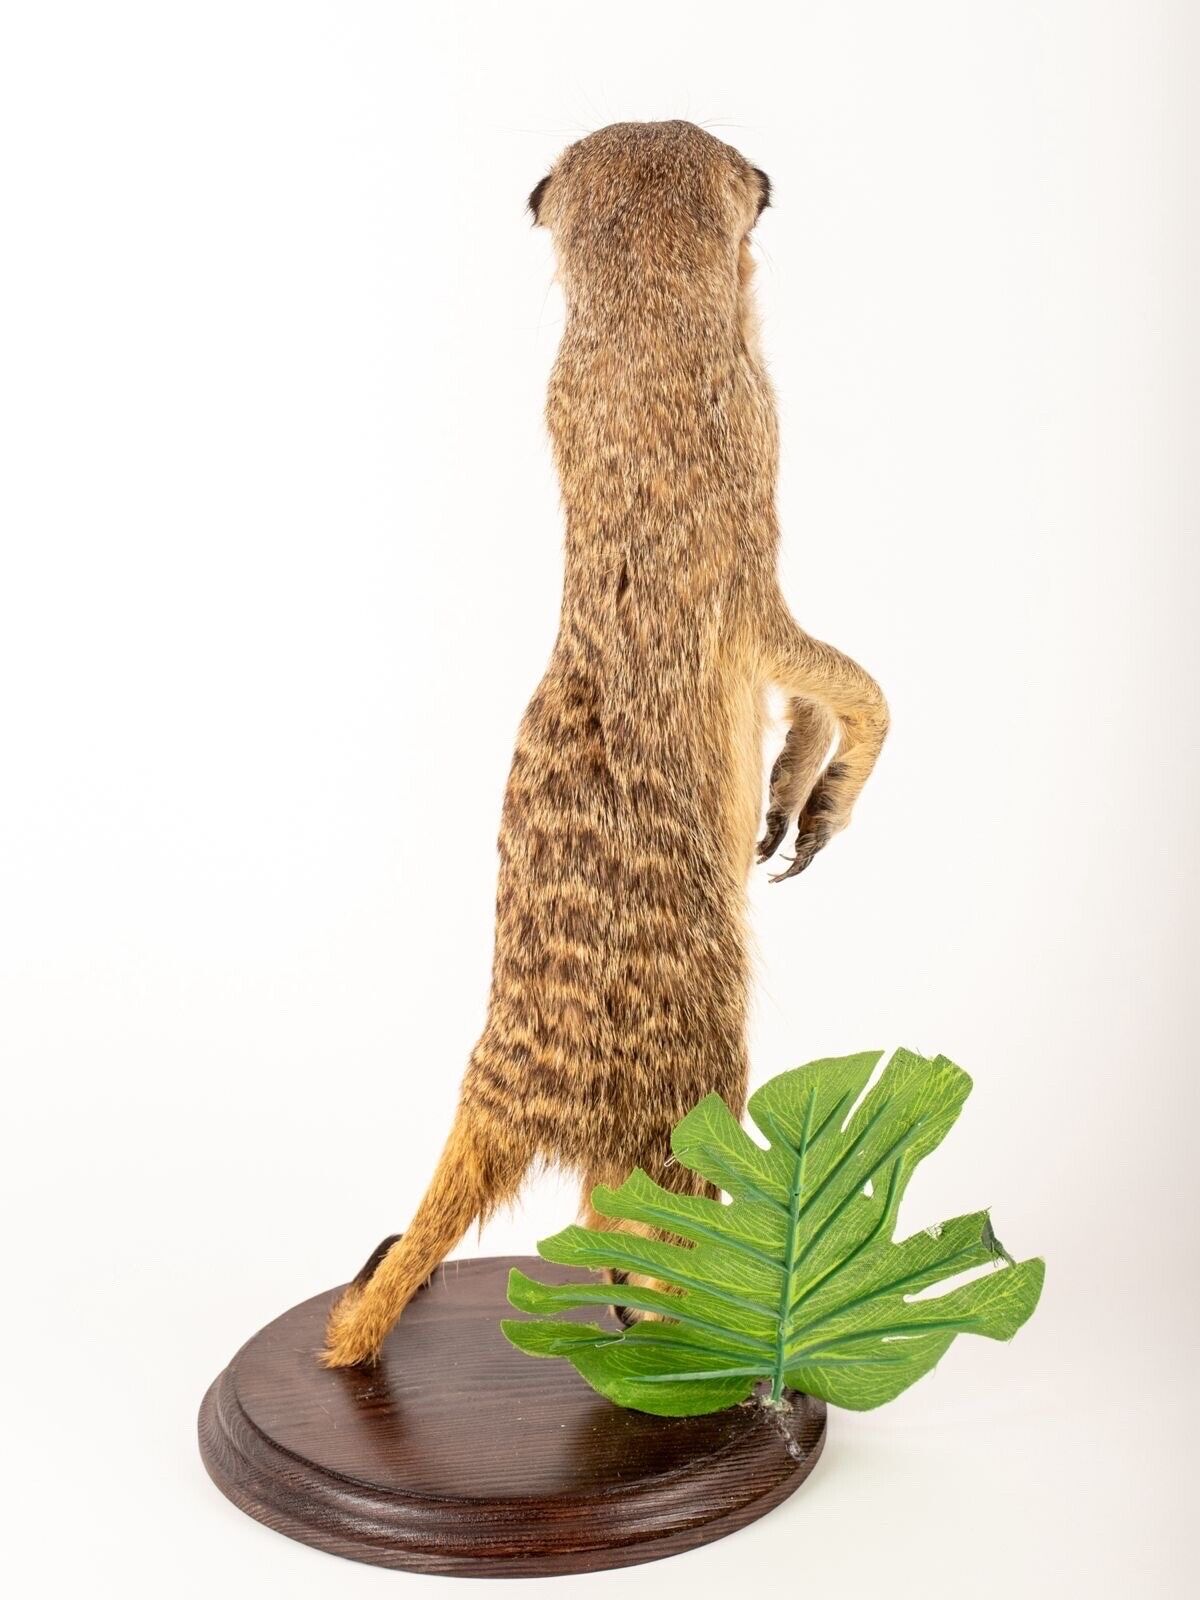 Rare Meerkat / Suricate Real Taxidermy Mount